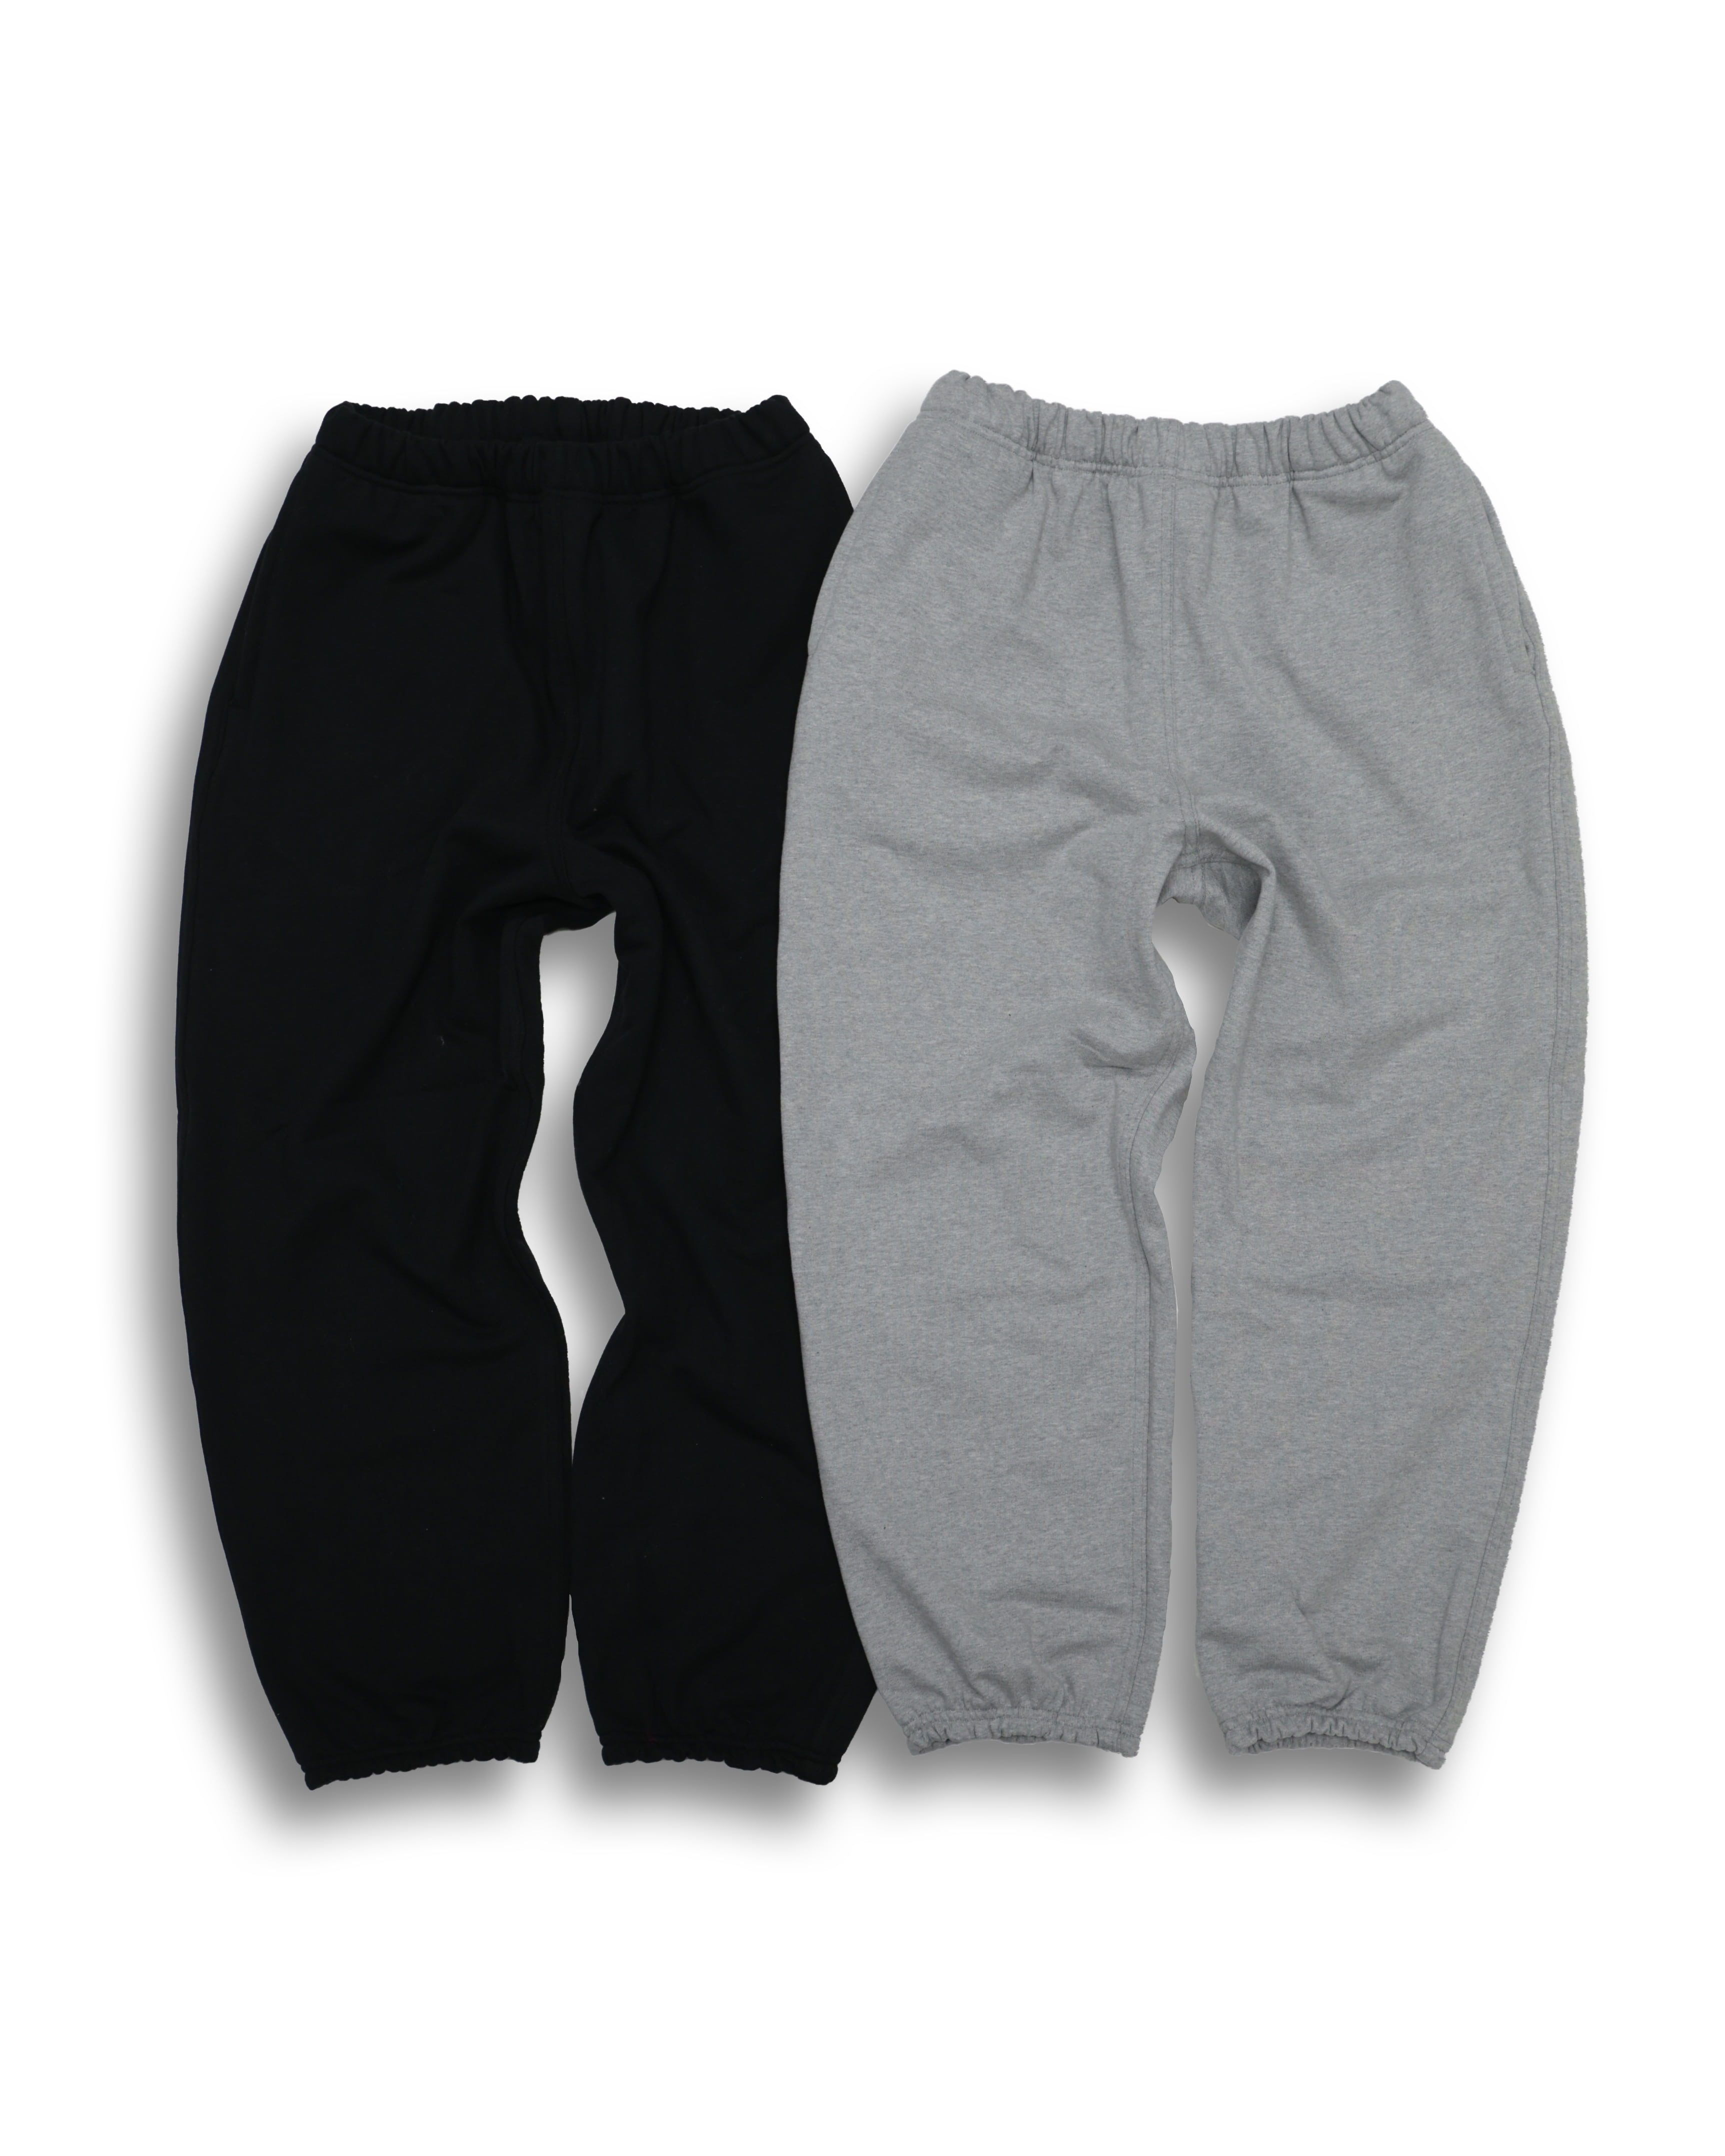 Coster Heavy Sweat Jogger Pants (Black/Gray/Light Gray) - 색상추가